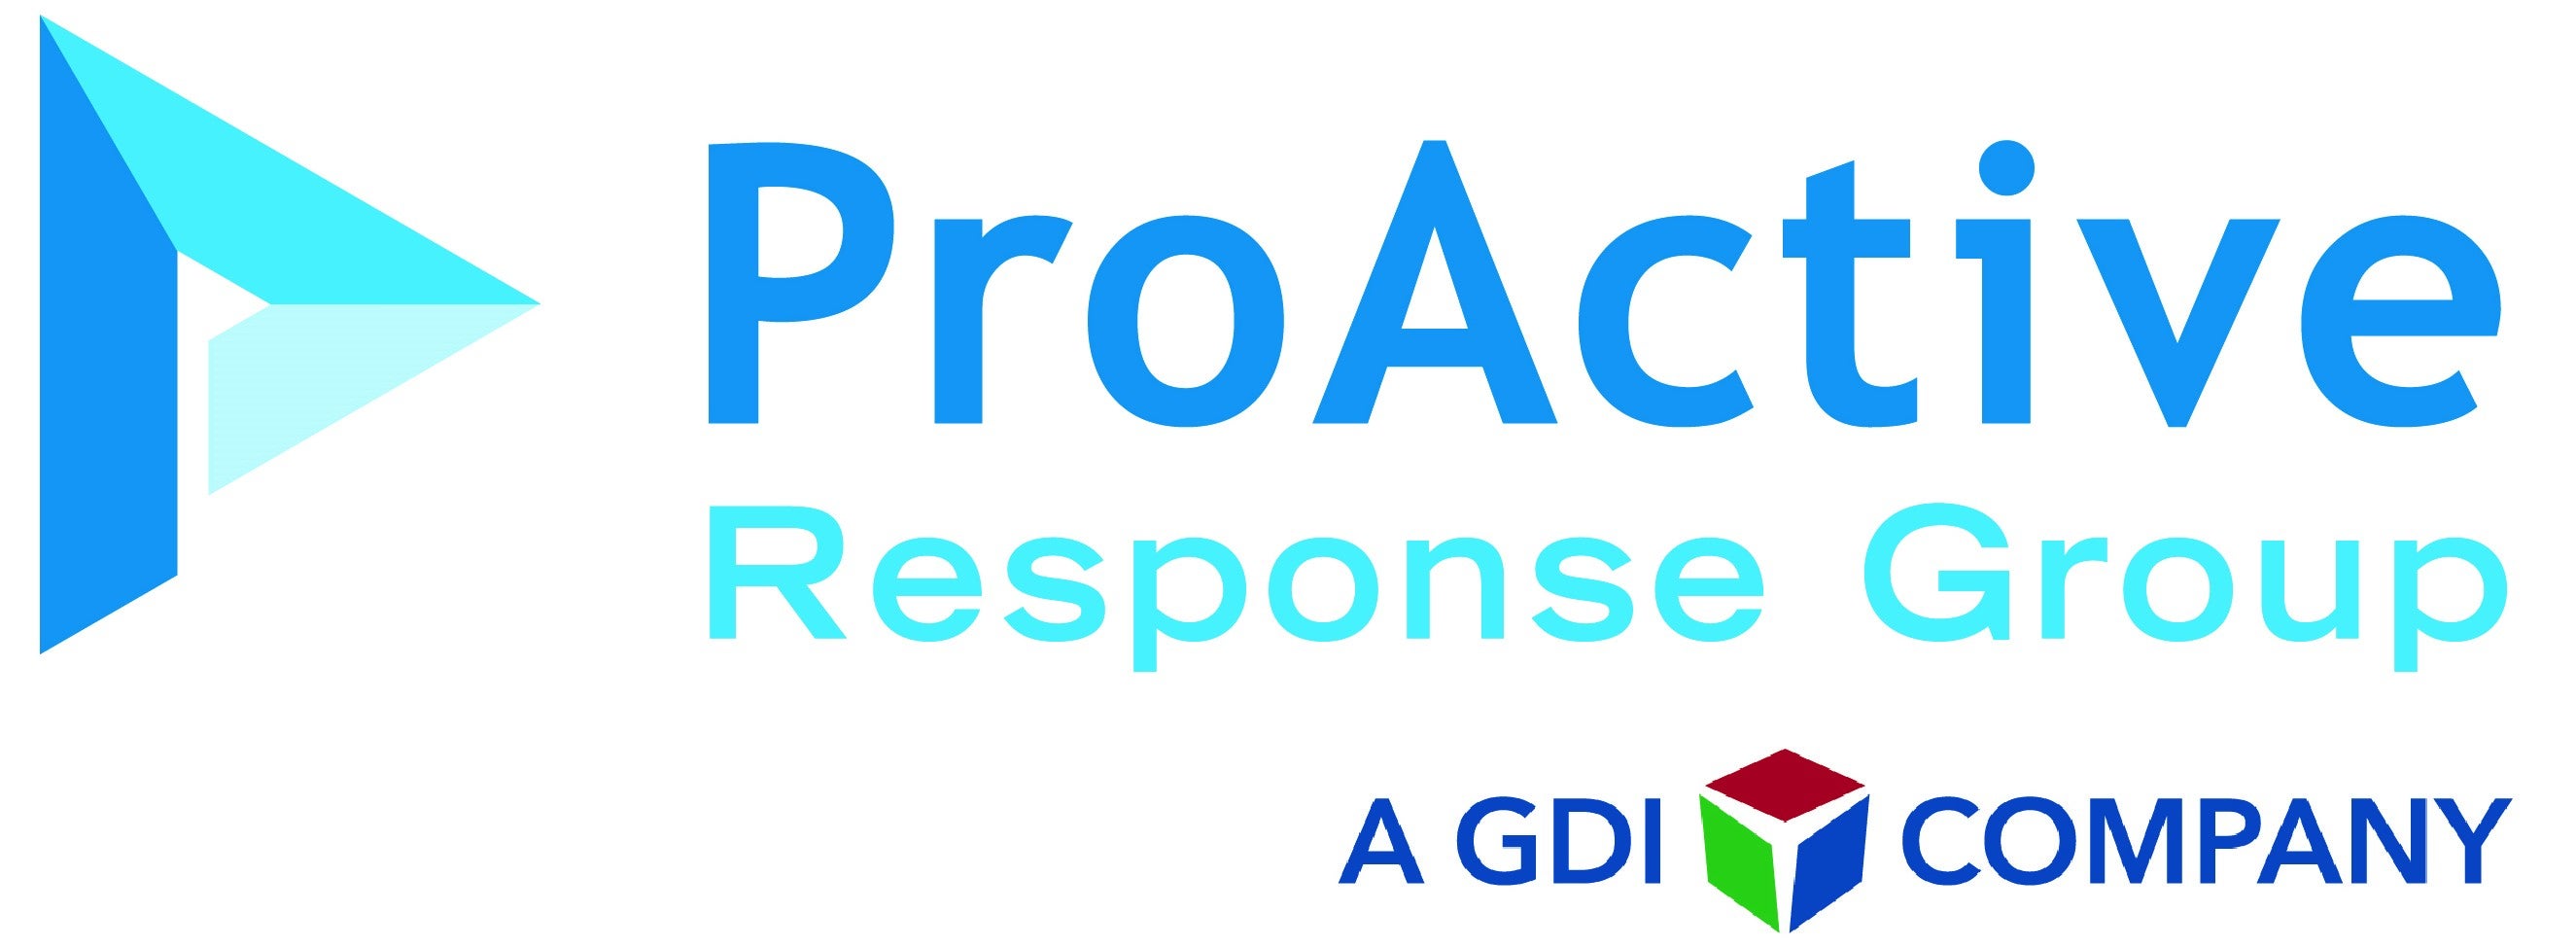 ProActive Response Group - A GDI Company